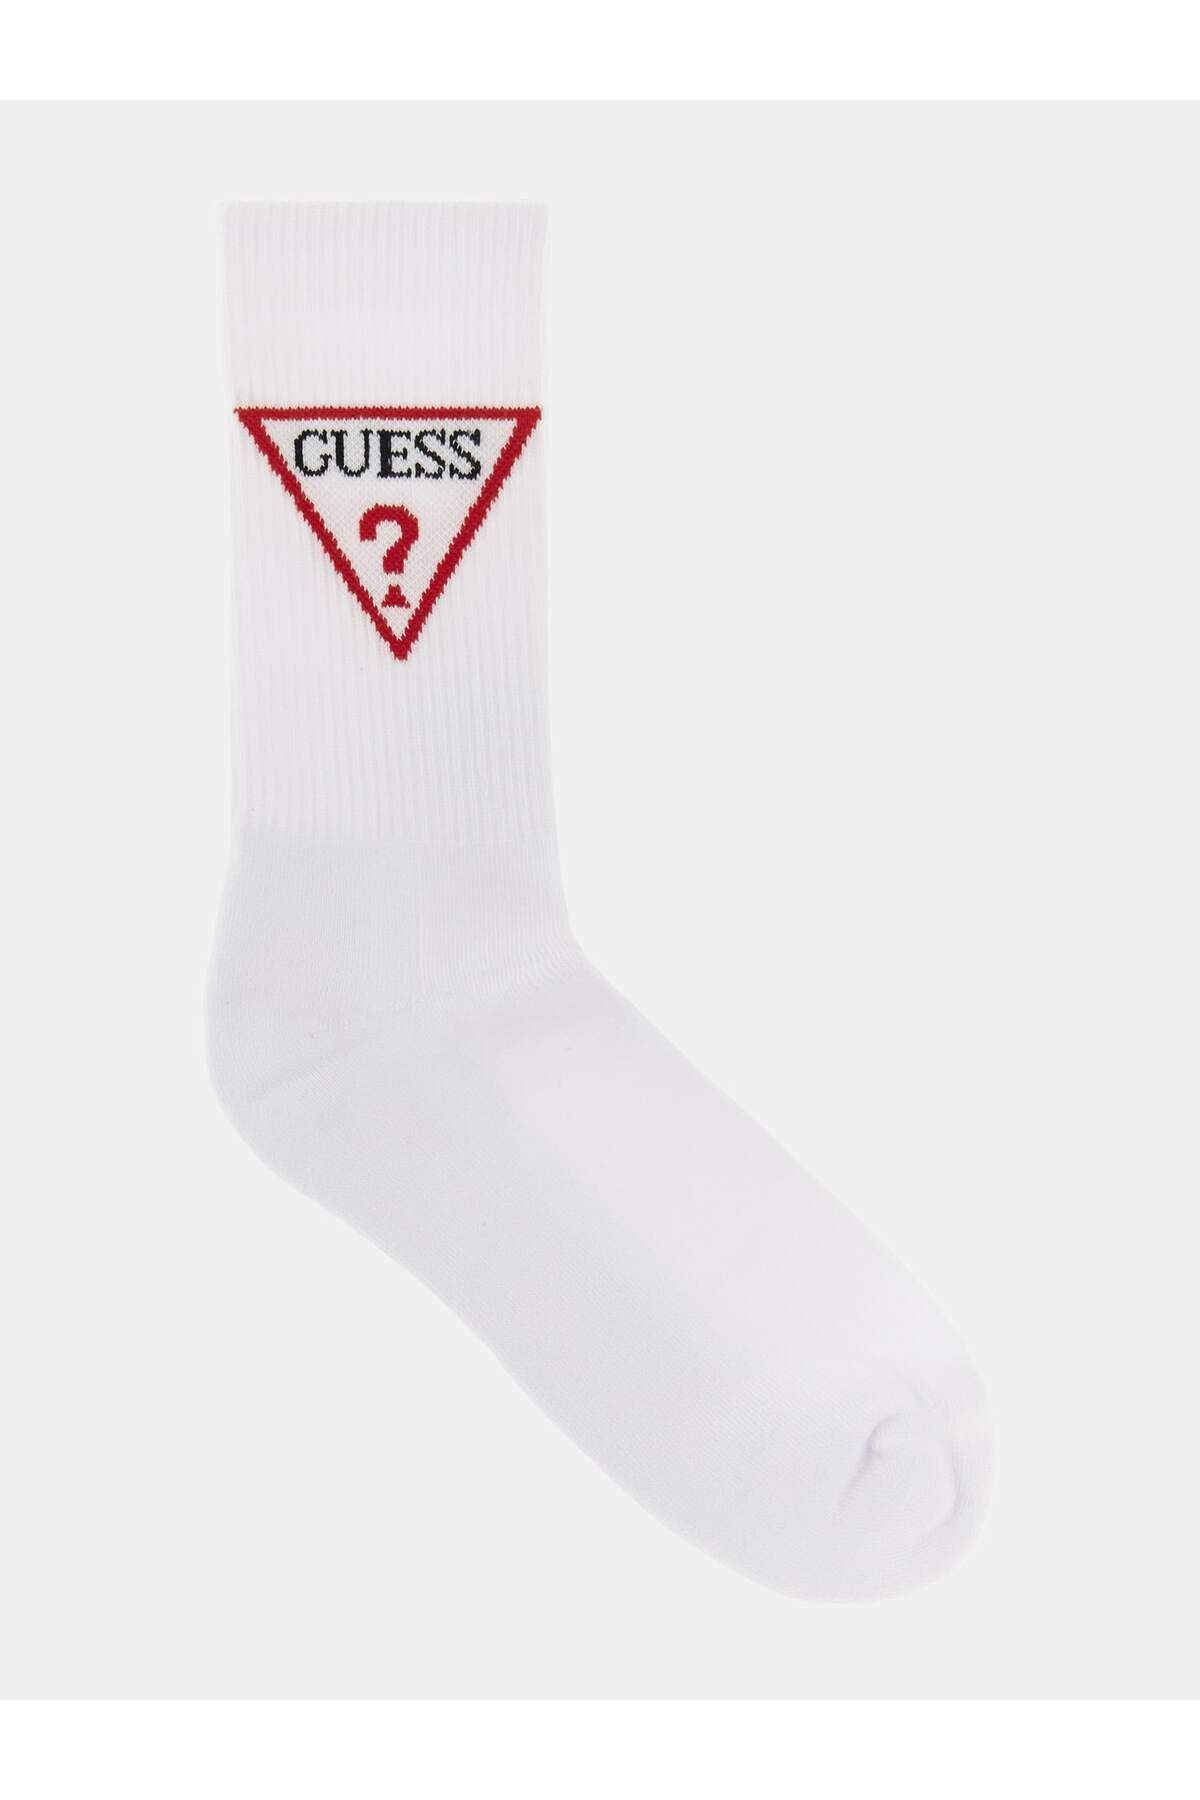 Guess Sport Erkek Çorap